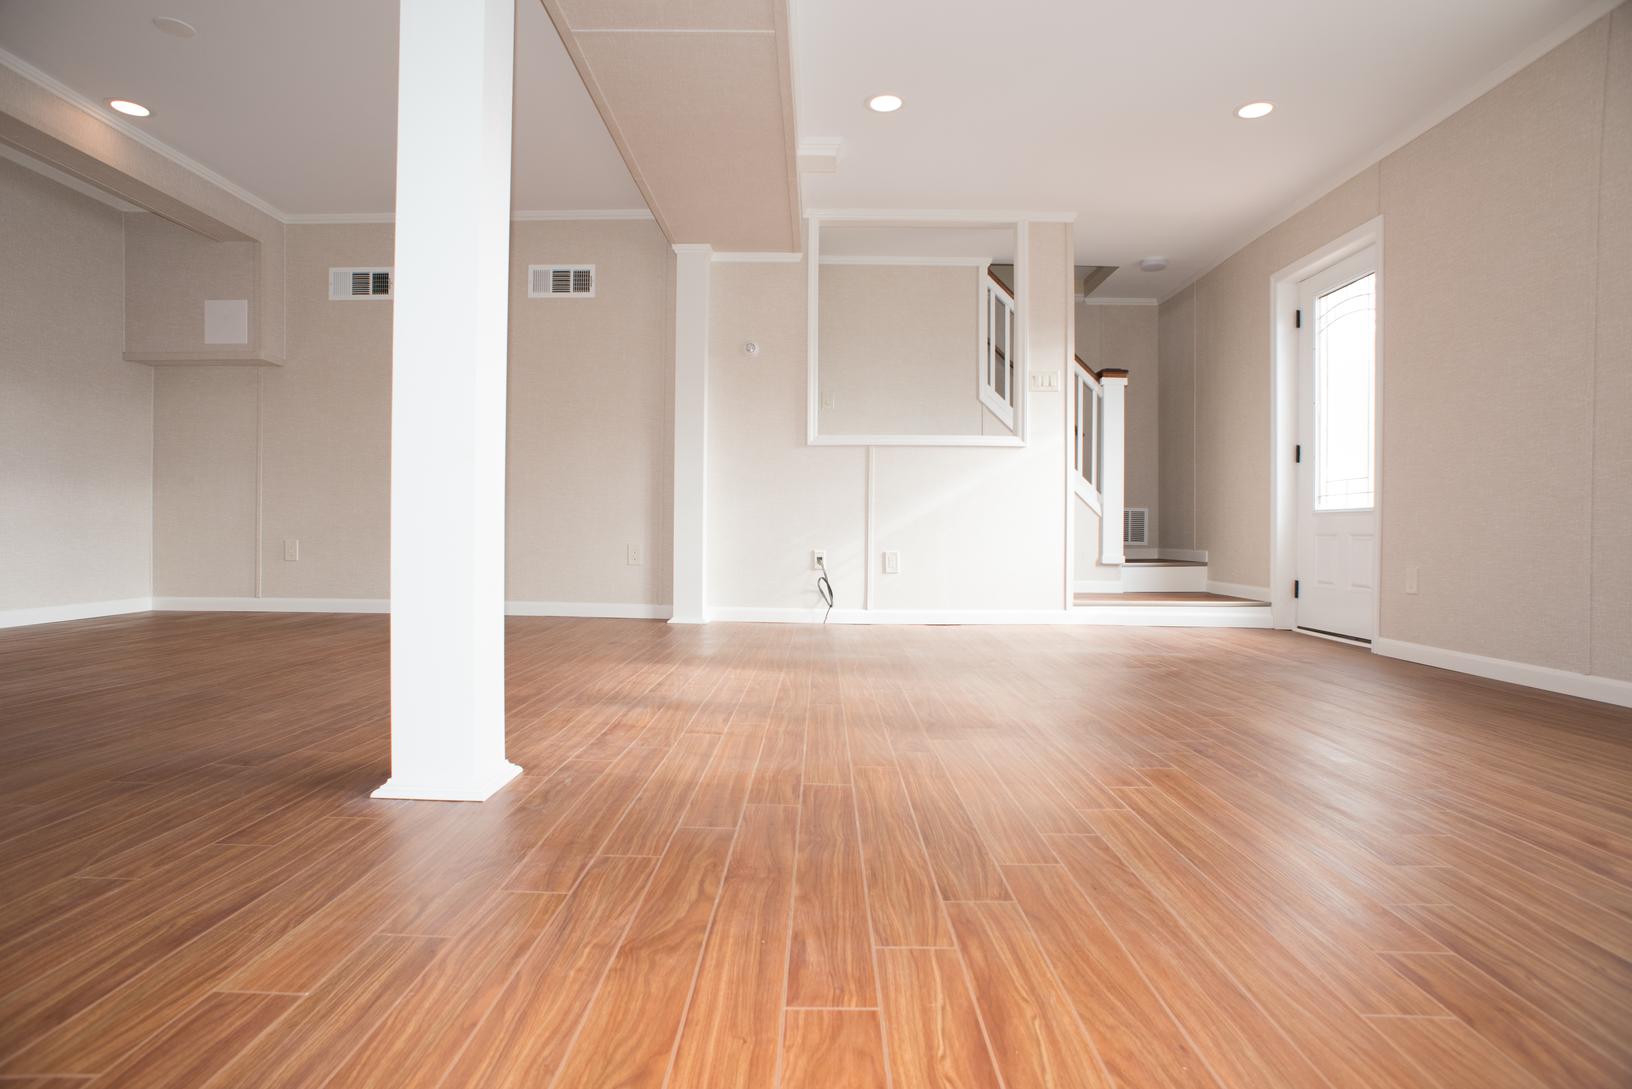 Flooring For Uneven Basement Floors Clsa Flooring Guide